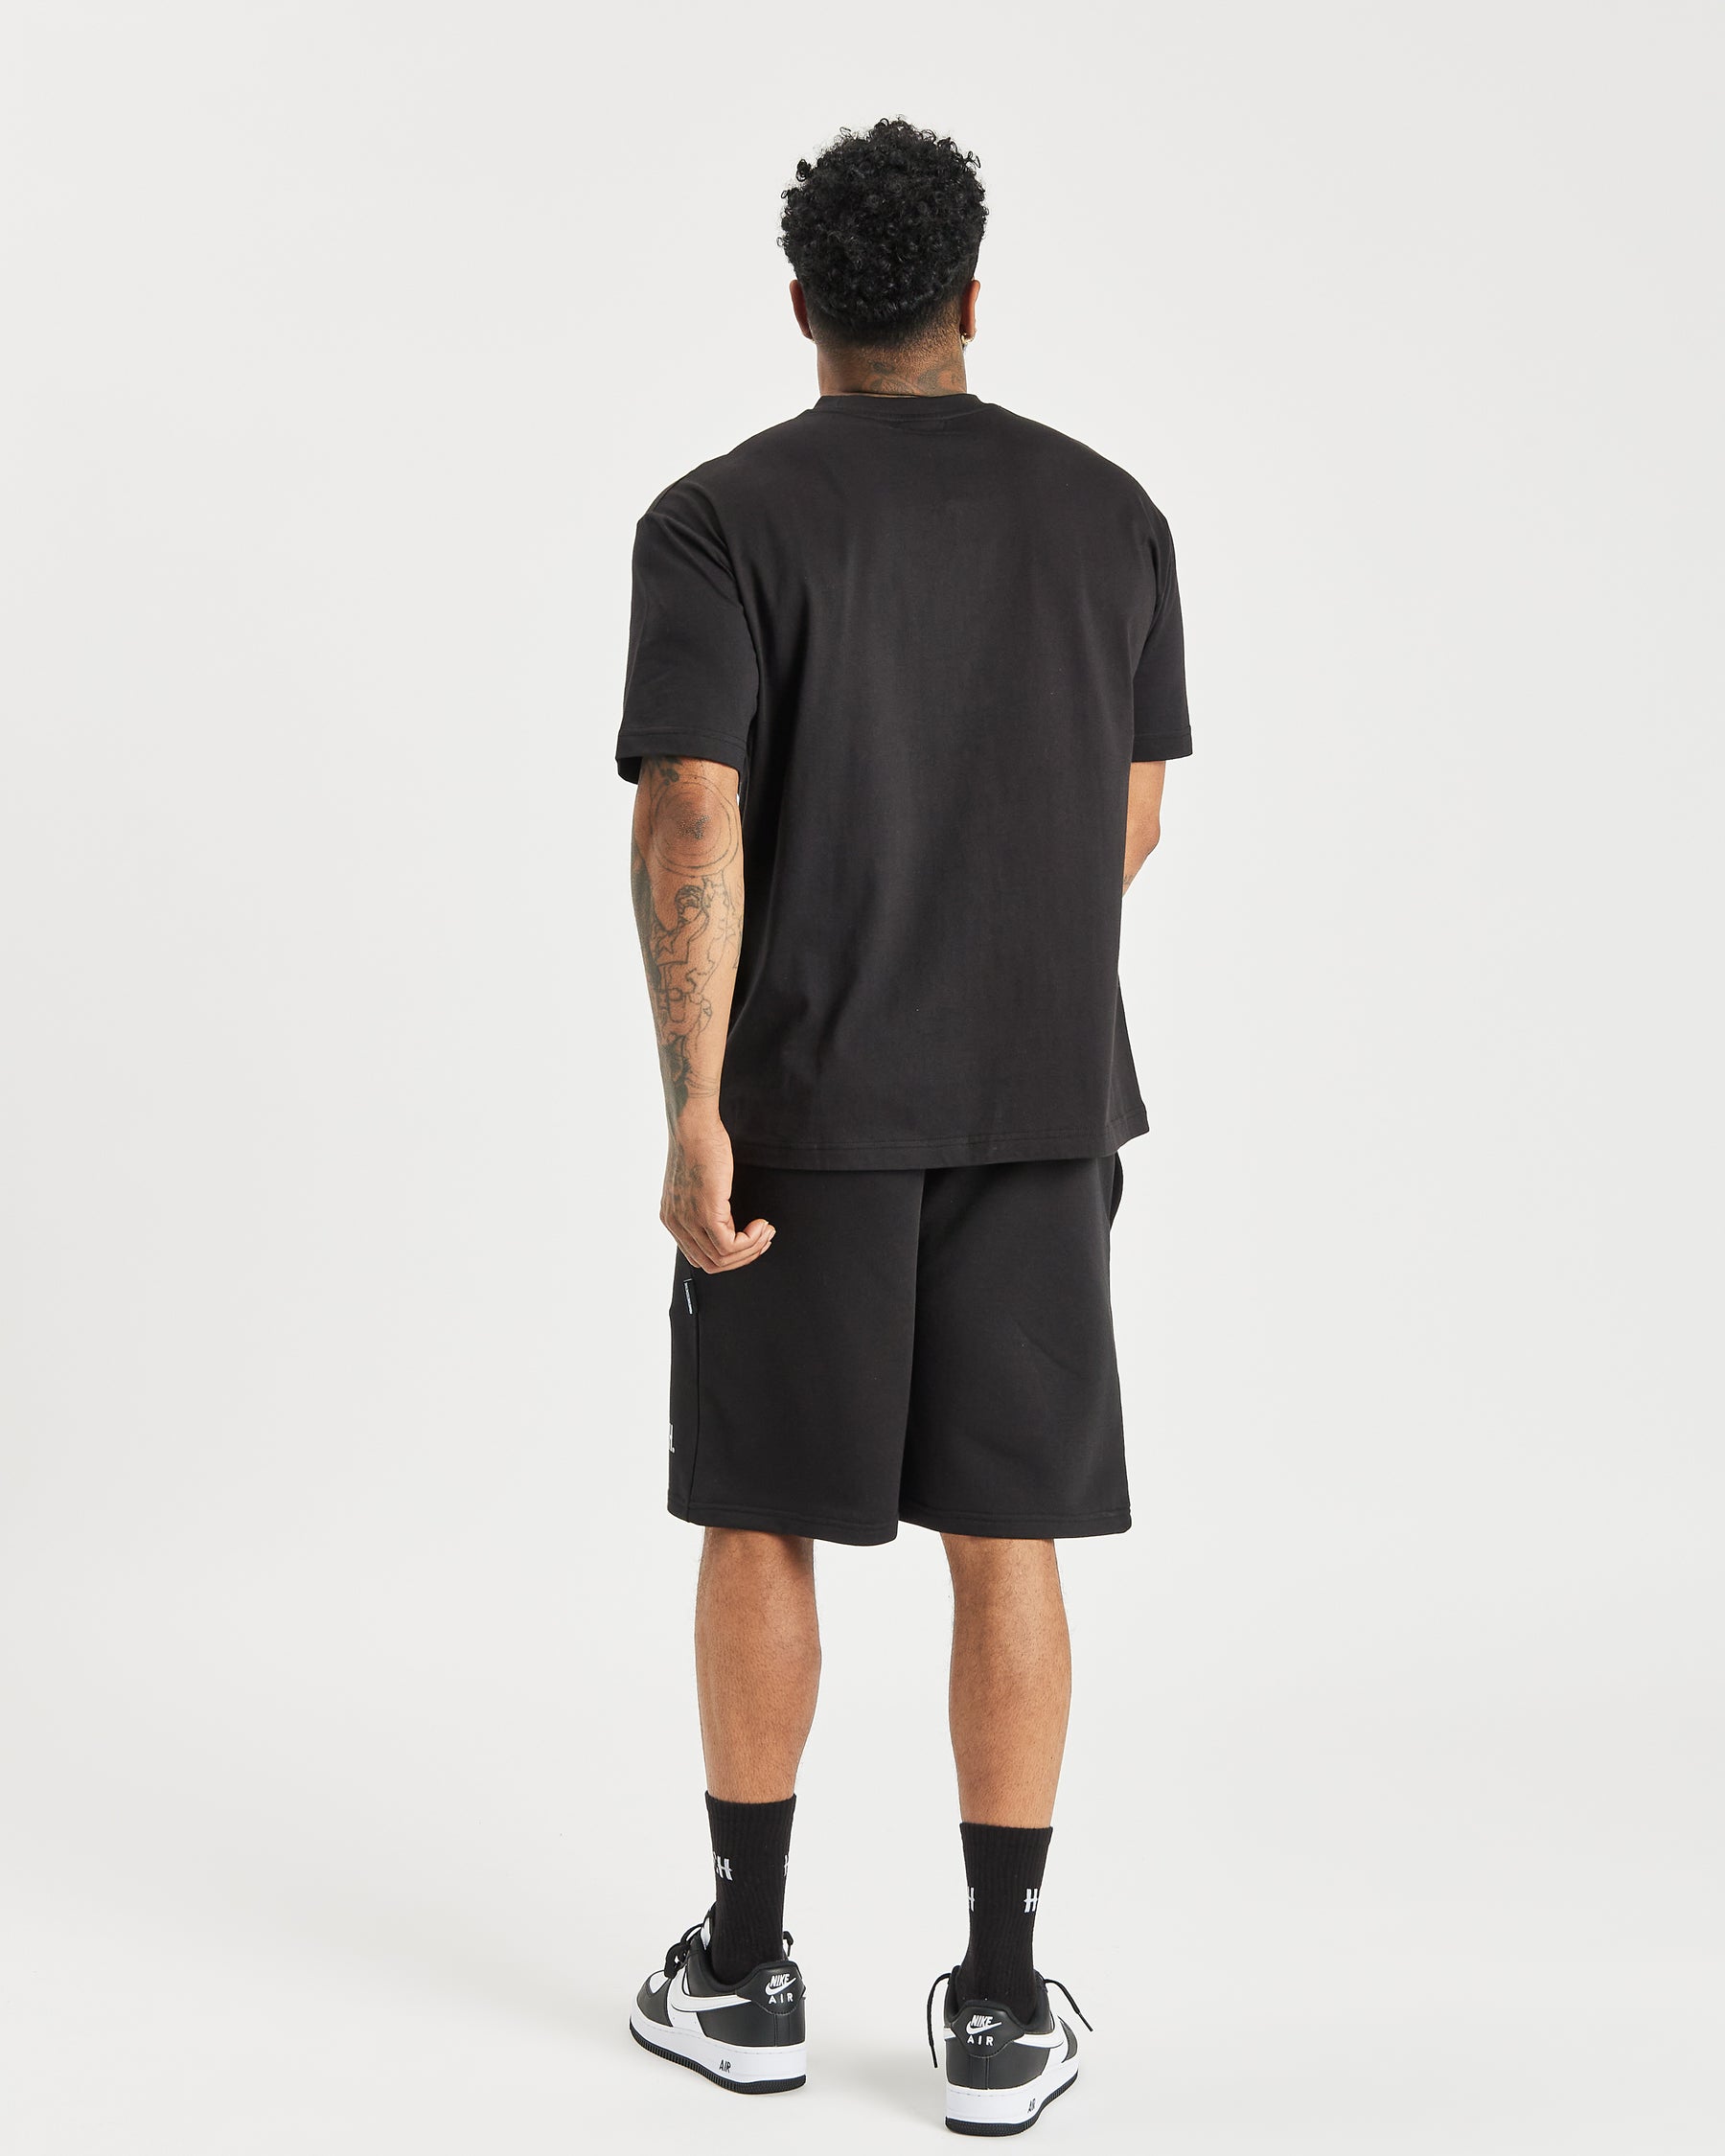 OG Core Small Logo Shorts Set - Black/White